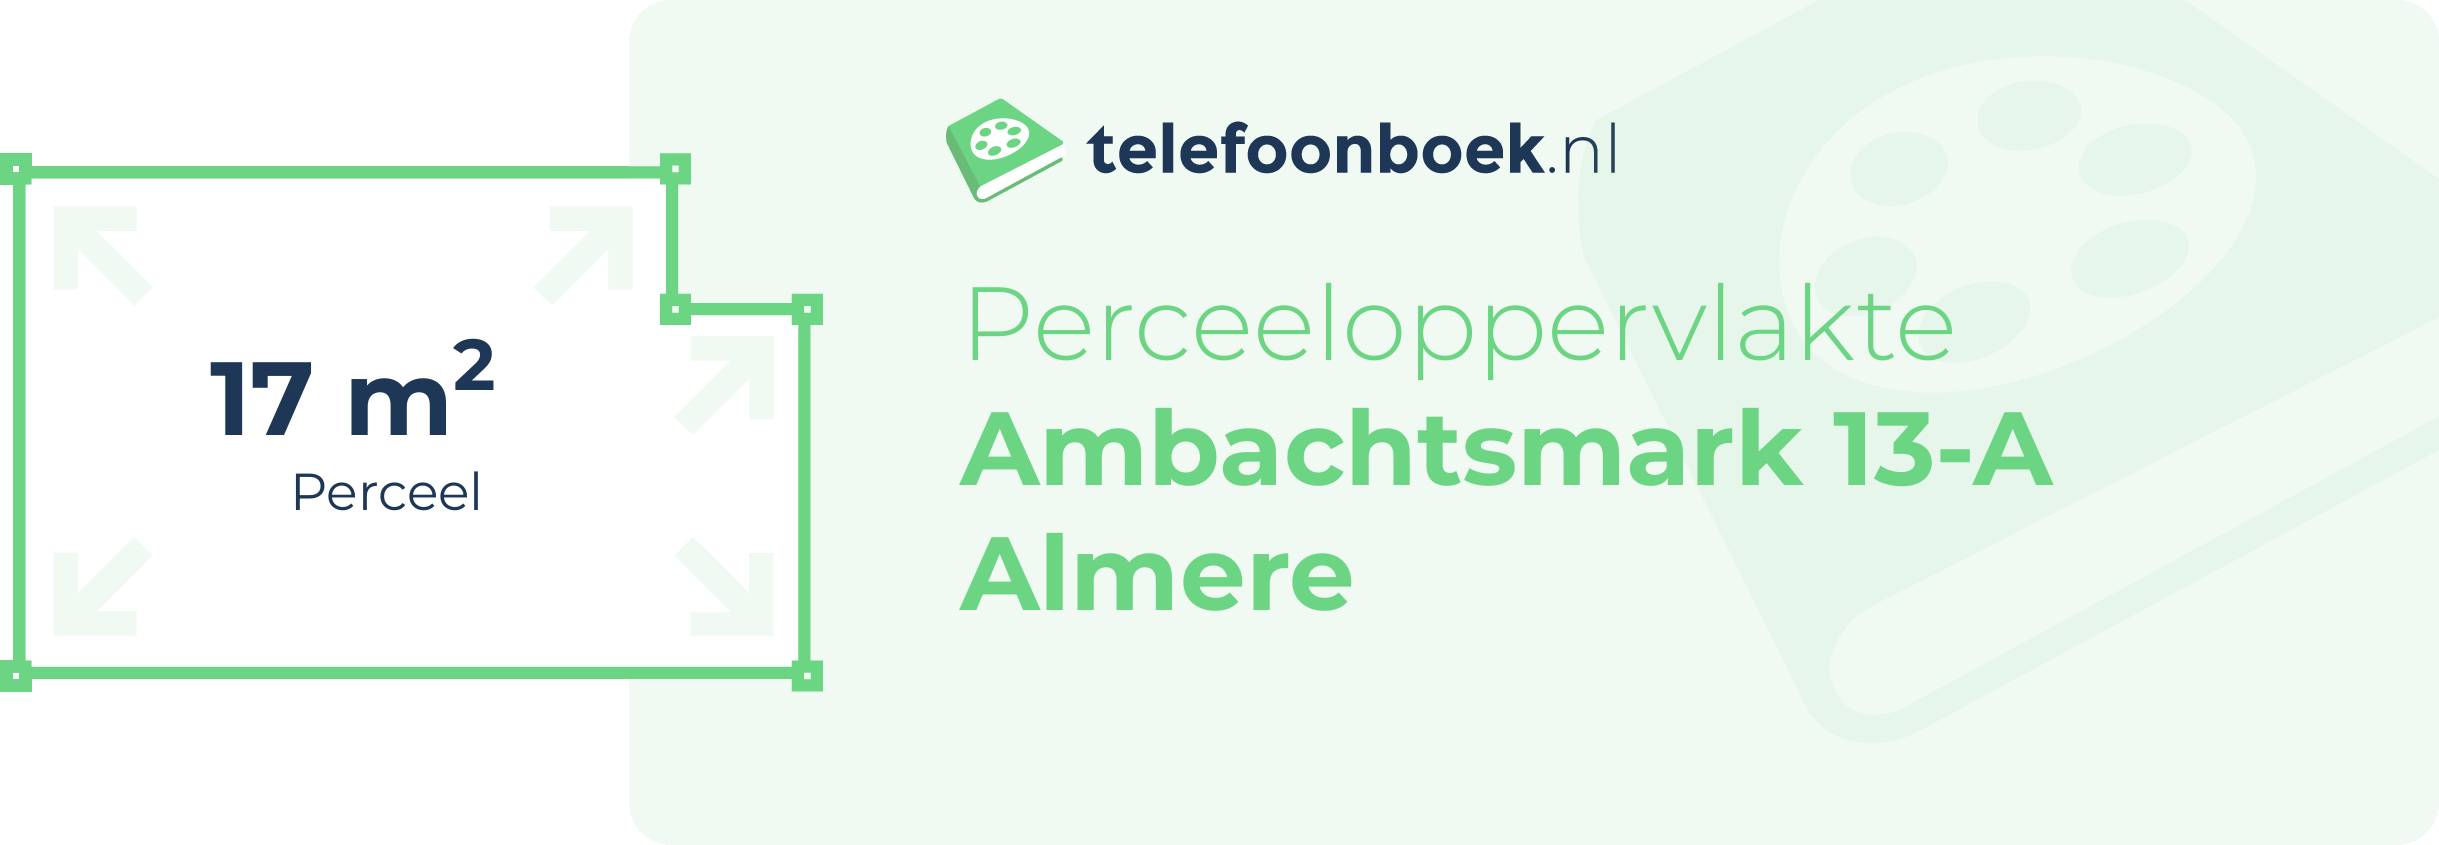 Perceeloppervlakte Ambachtsmark 13-A Almere